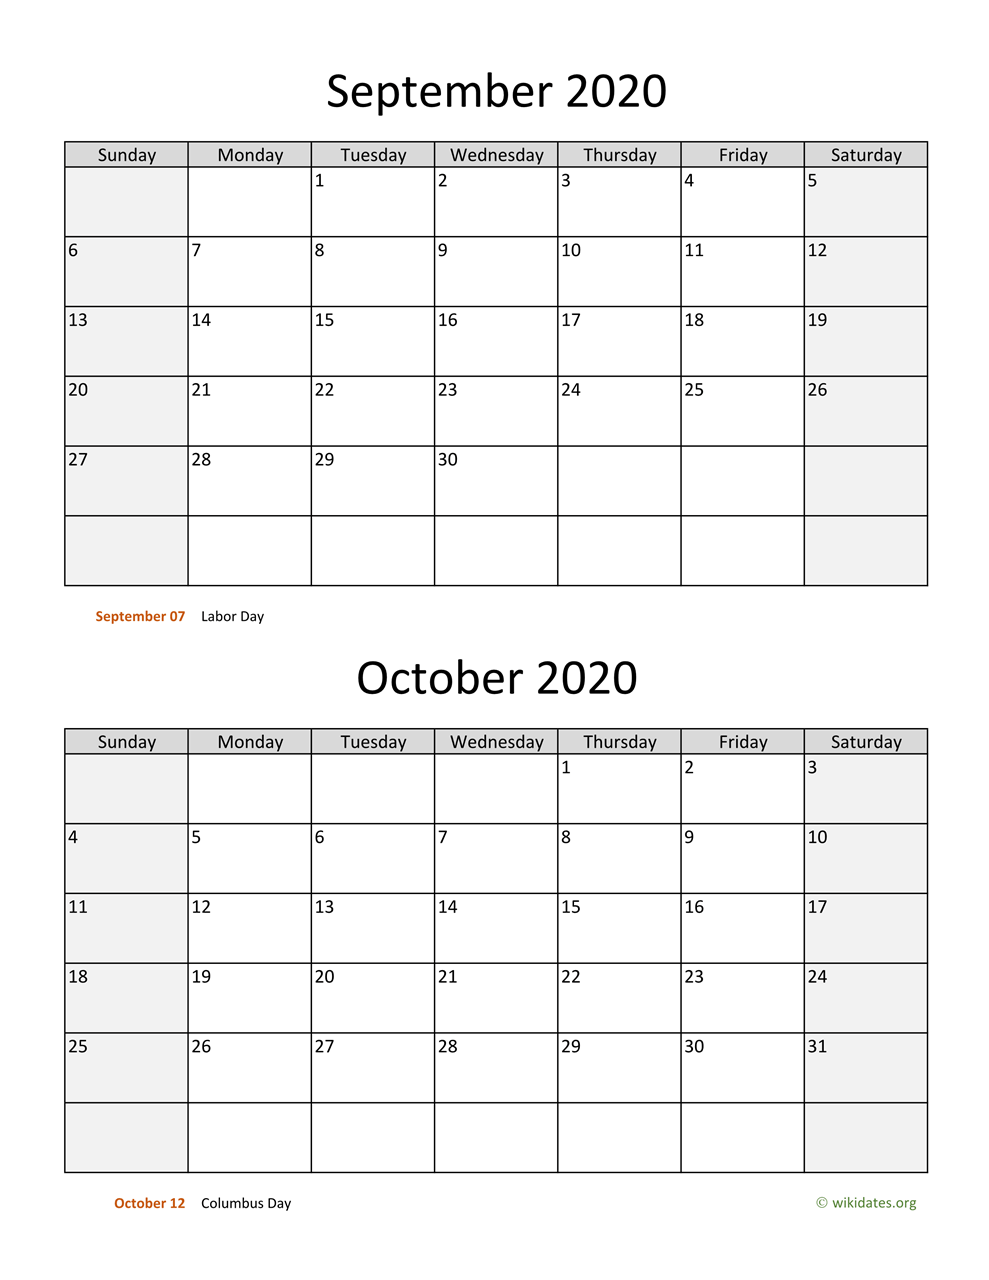 September And October 2020 Calendar